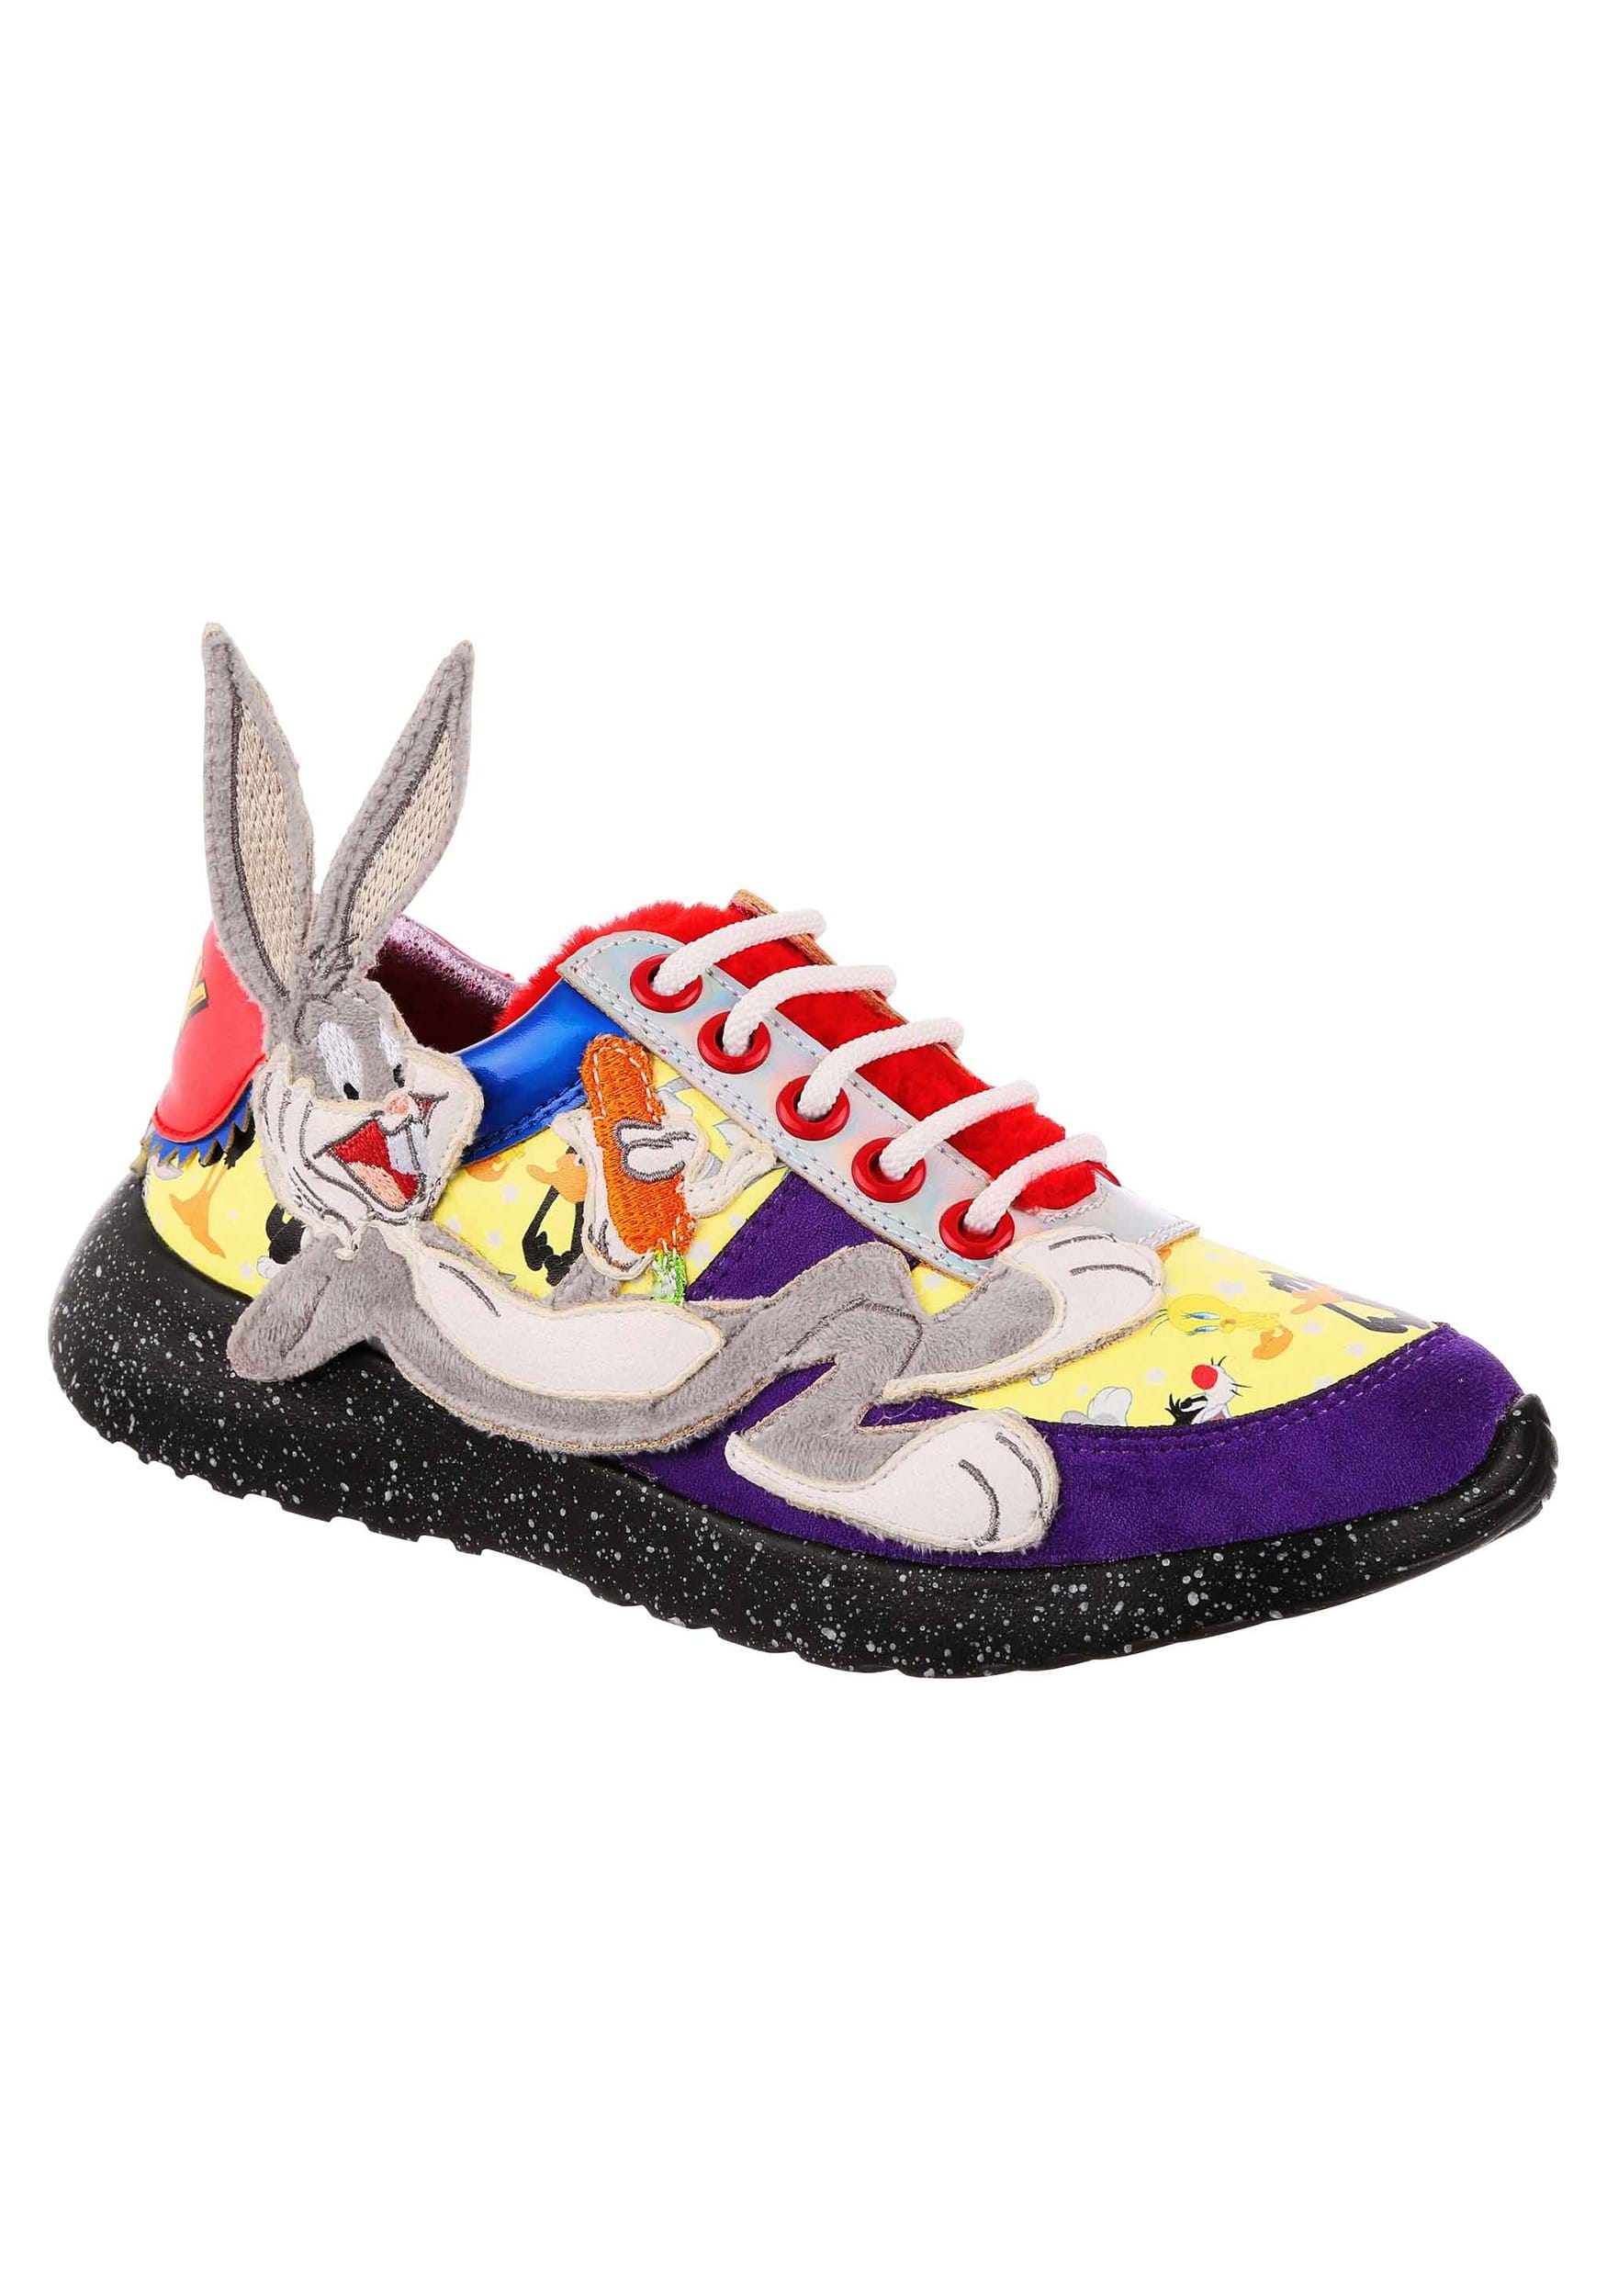 Looney Tunes Carrots & Jokes Irregular Choice Sneakers